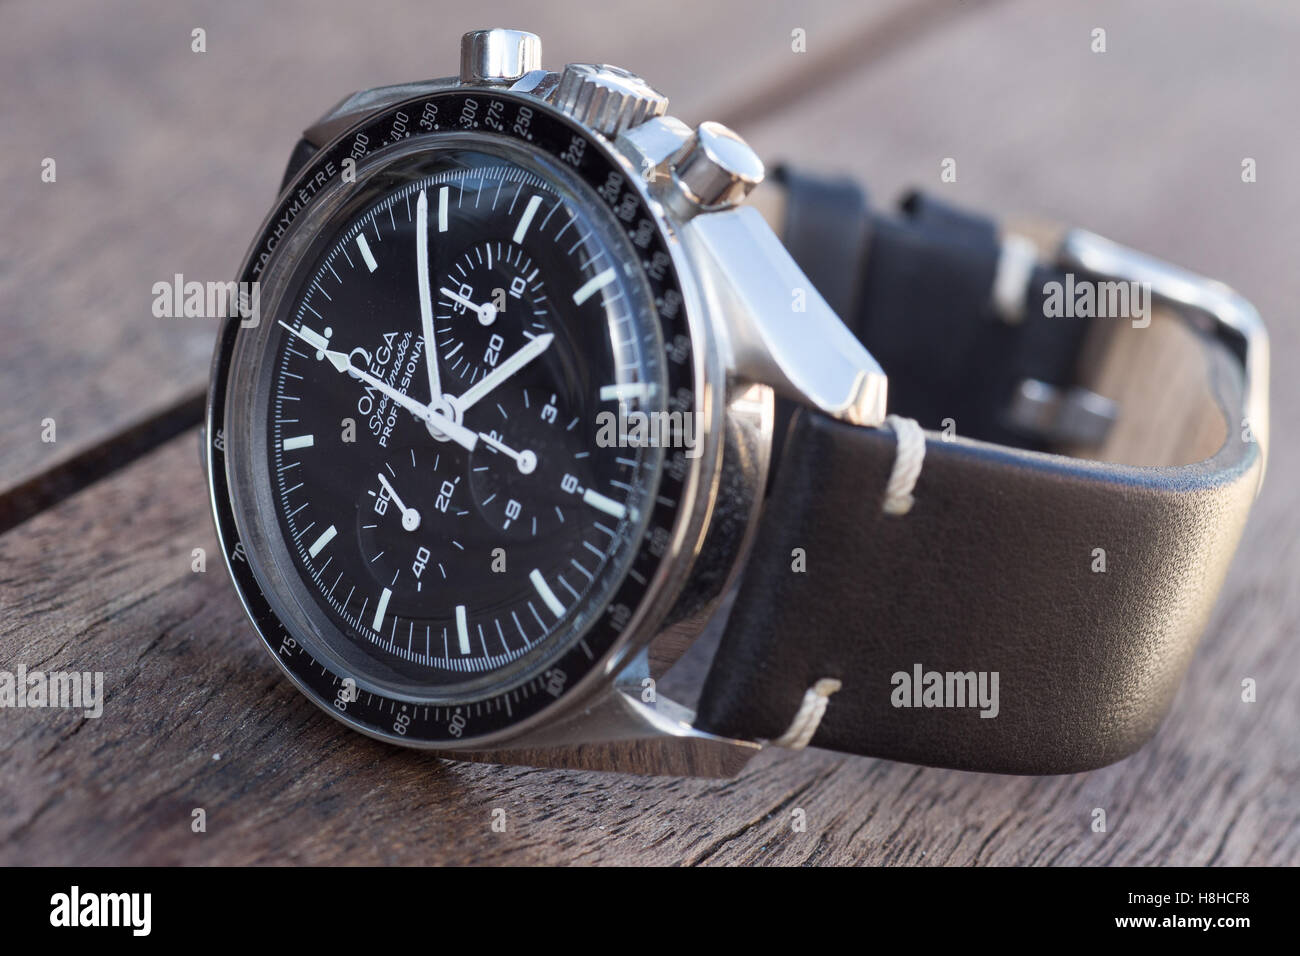 Omega Speedmaster Professional Moonwatch on black leather strap Stock Photo  - Alamy